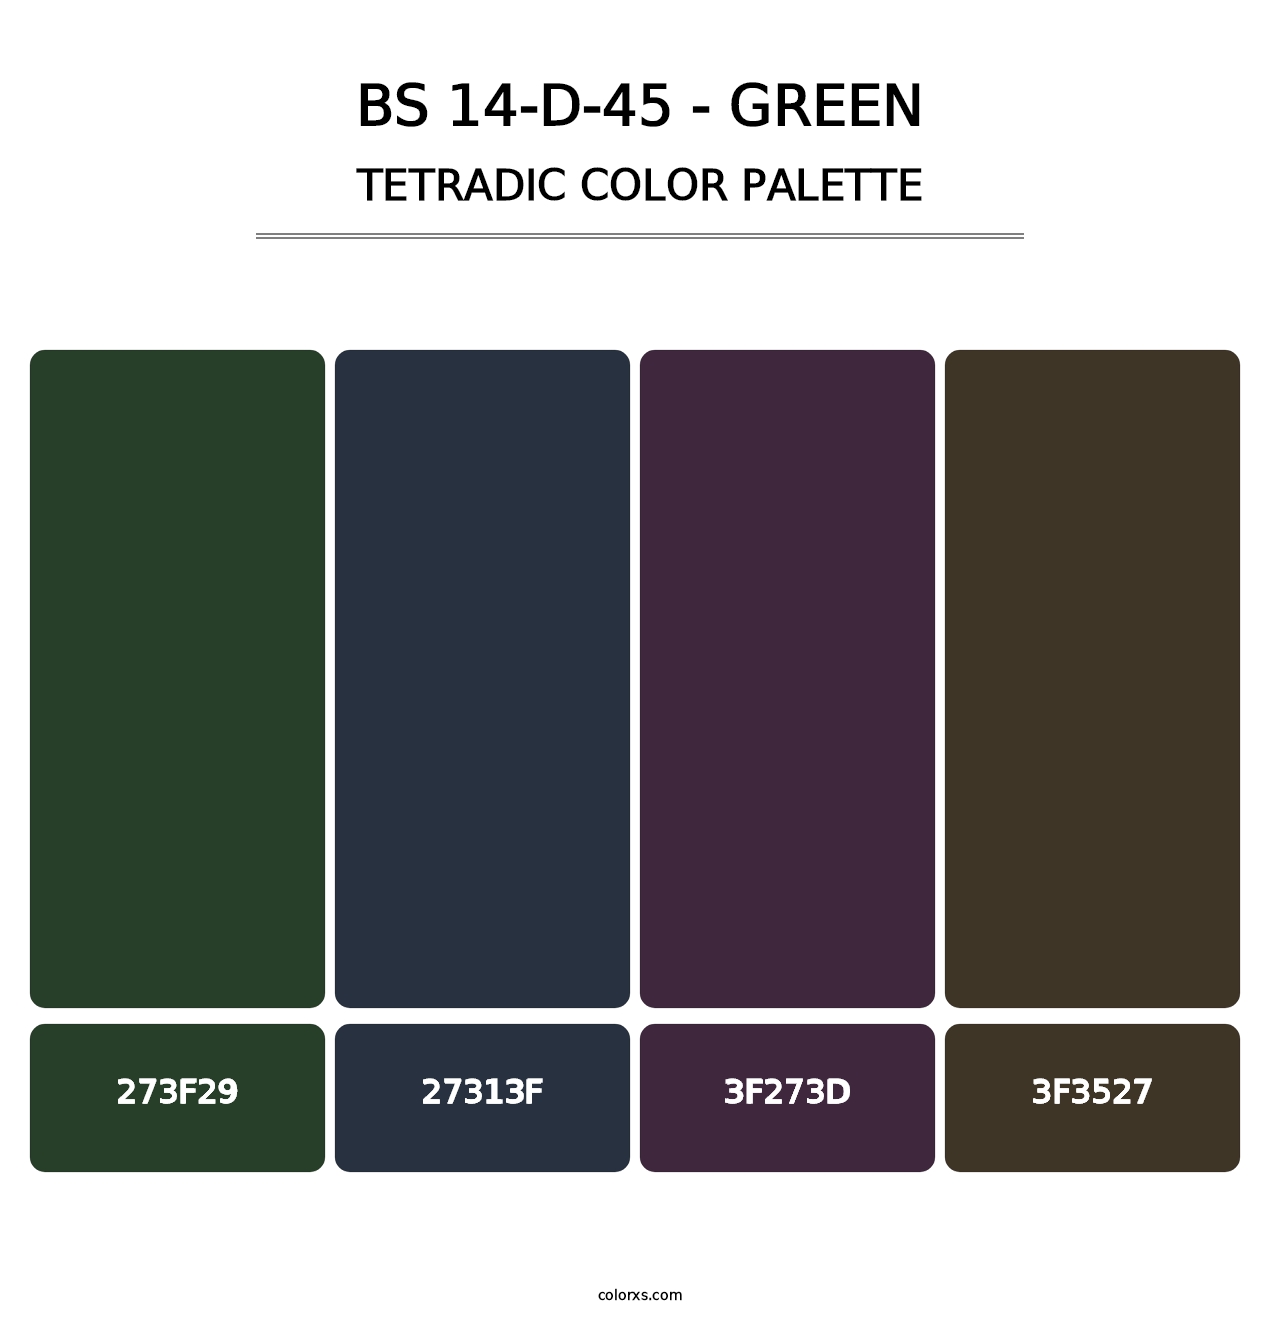 BS 14-D-45 - Green - Tetradic Color Palette